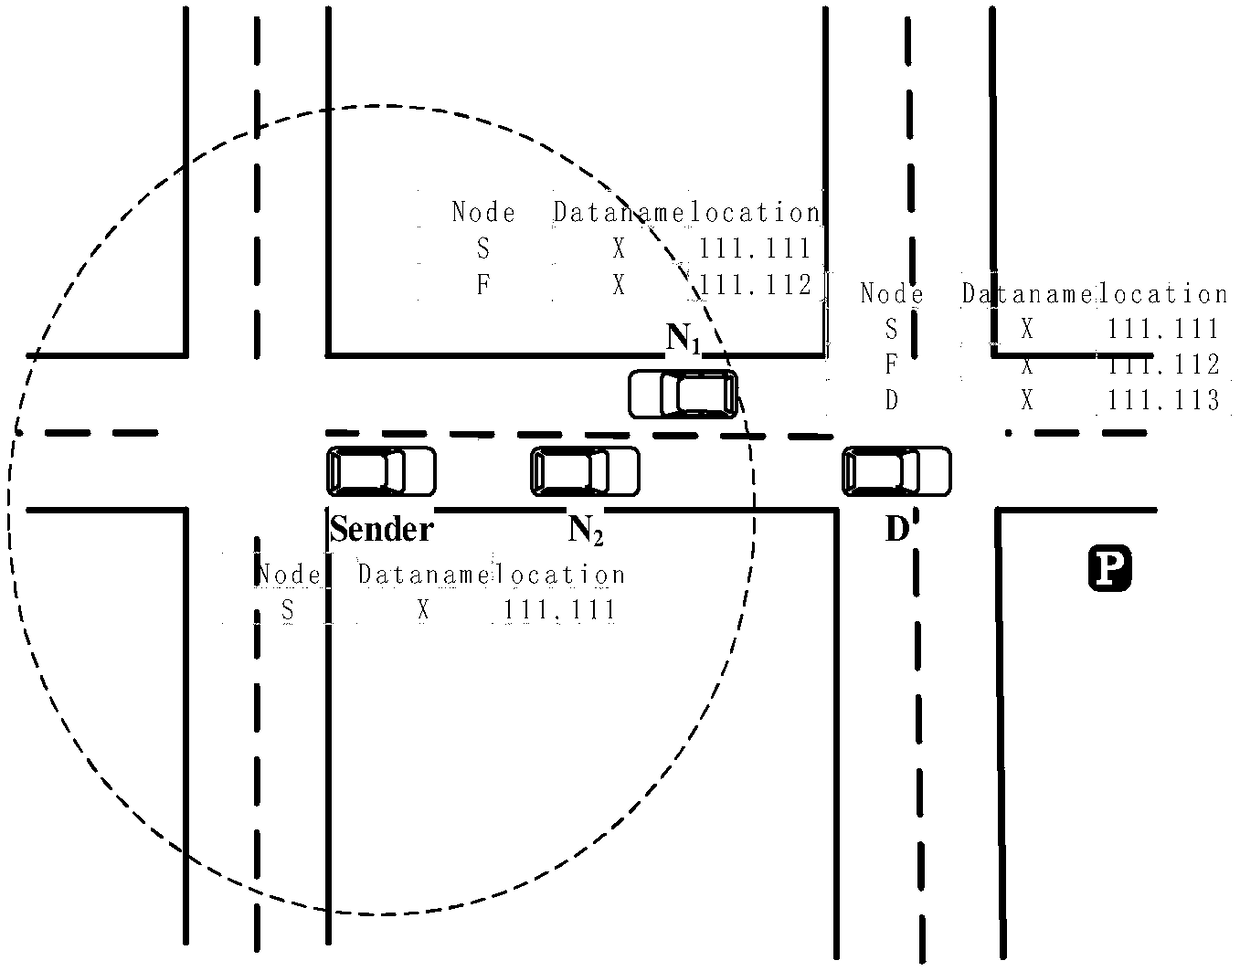 Interest packet forwarding method based on data attributes in vehicle named data network